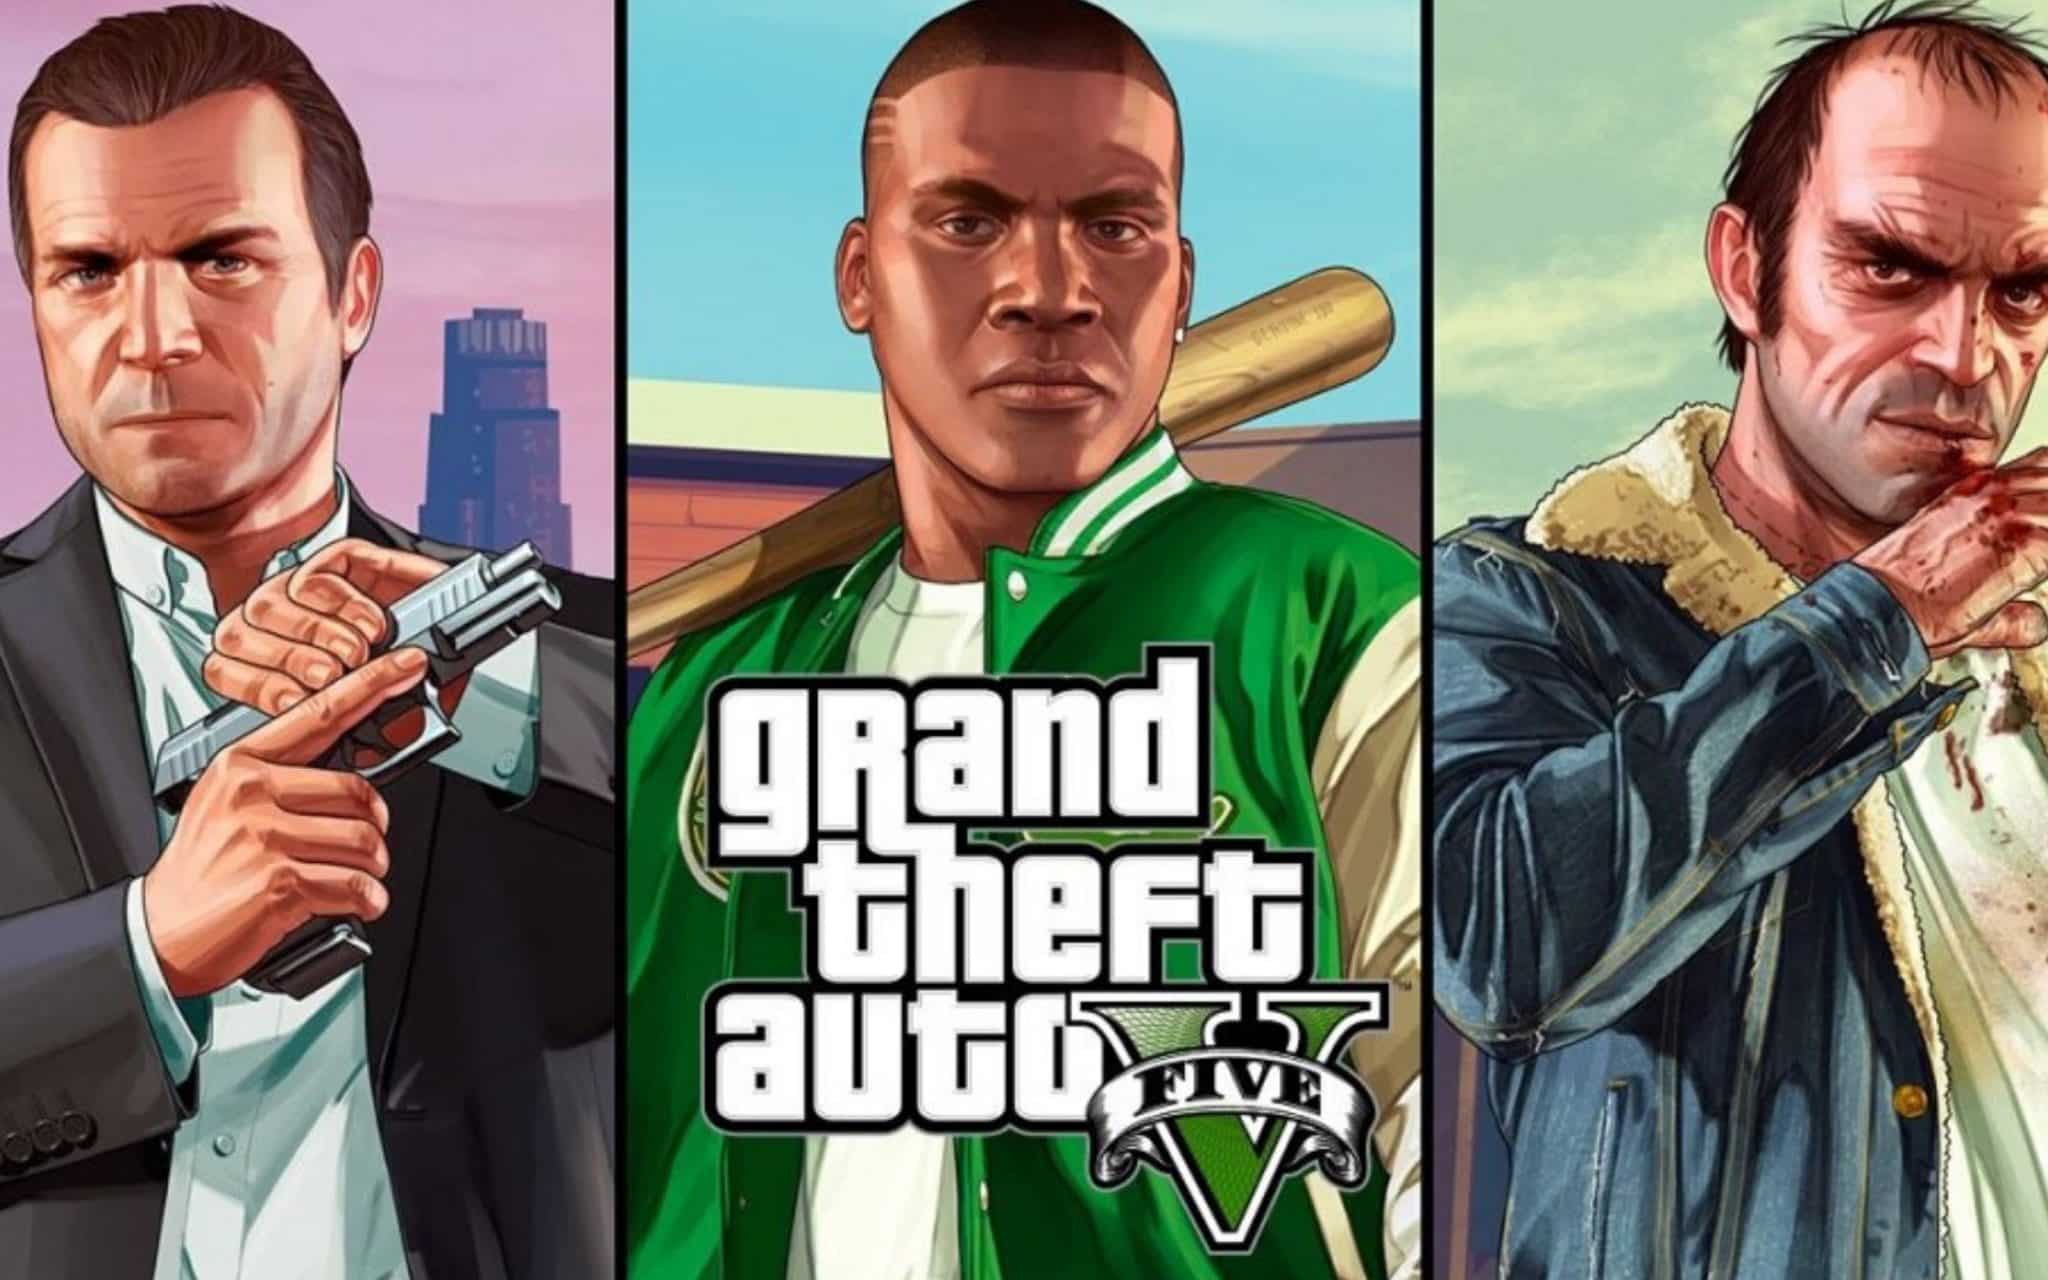 Grand Theft Auto gta online rockstar dlc